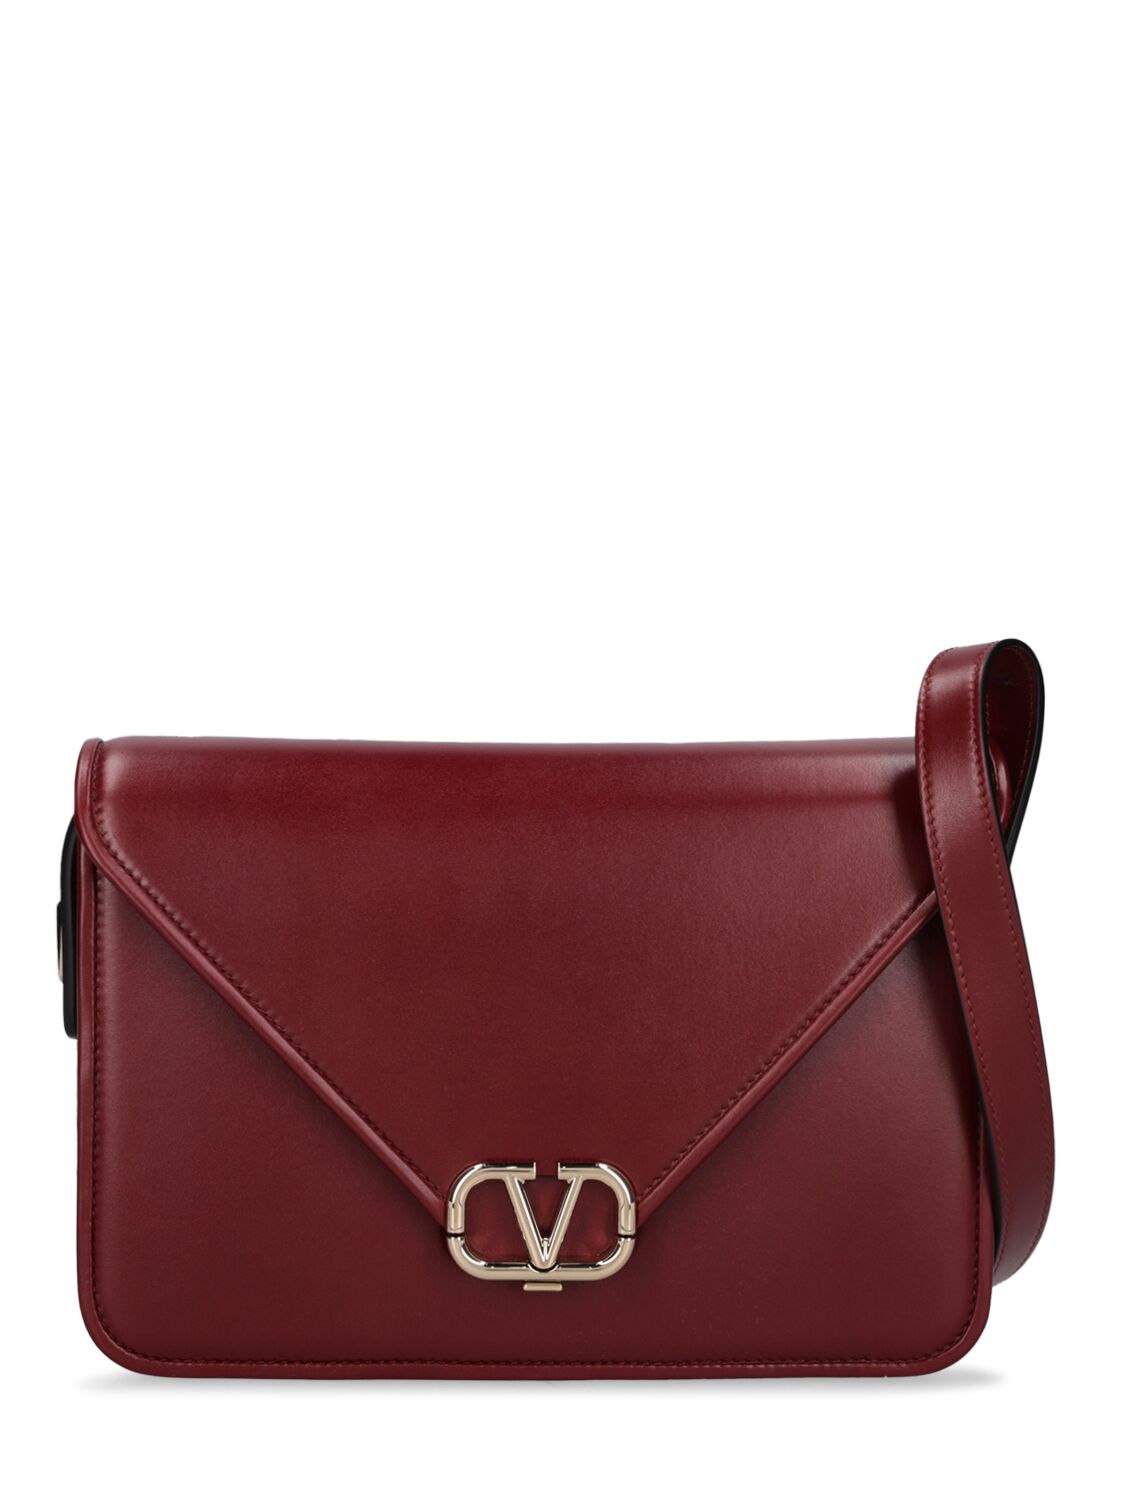 Valentino Garavani V Logo Leather Shoulder Bag In Brown